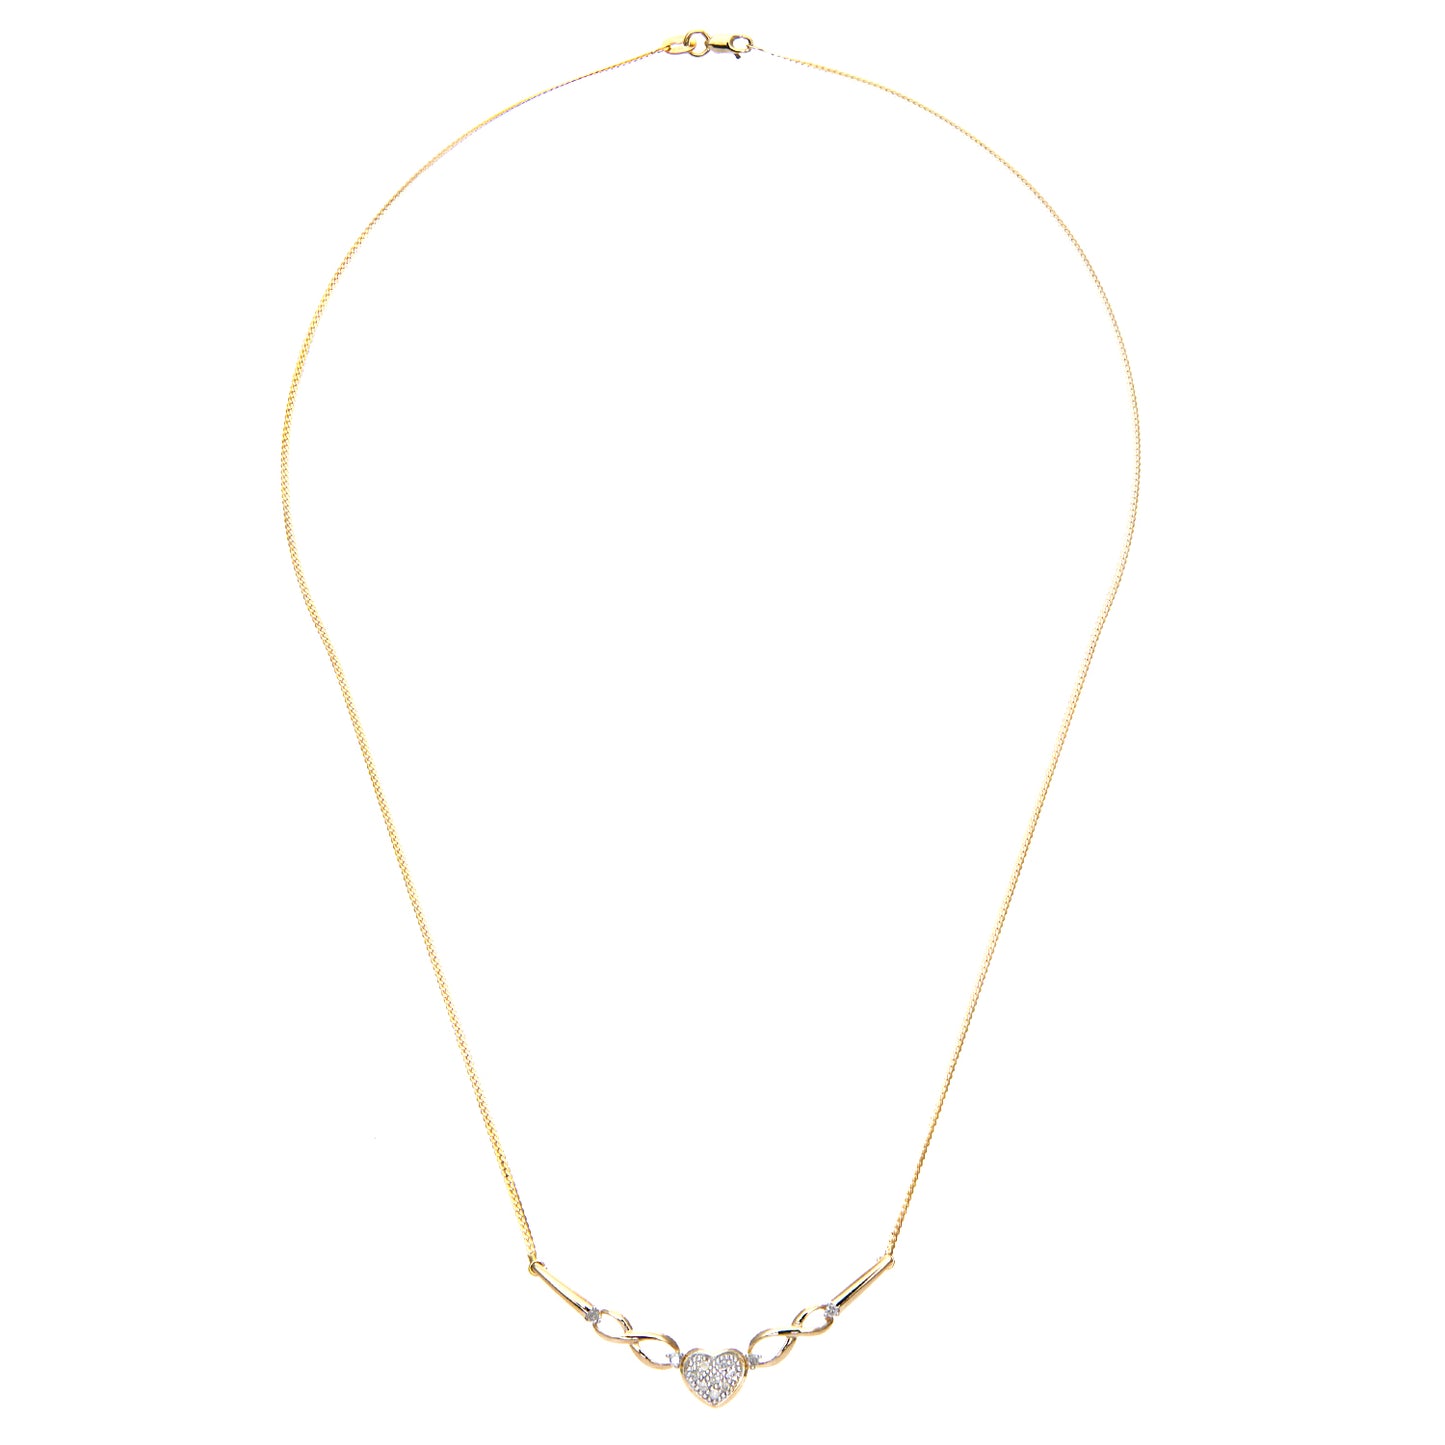 9ct Gold  Round 10pts Diamond Heart Lavalier Necklace 18 inch - PNEAXL01409Y